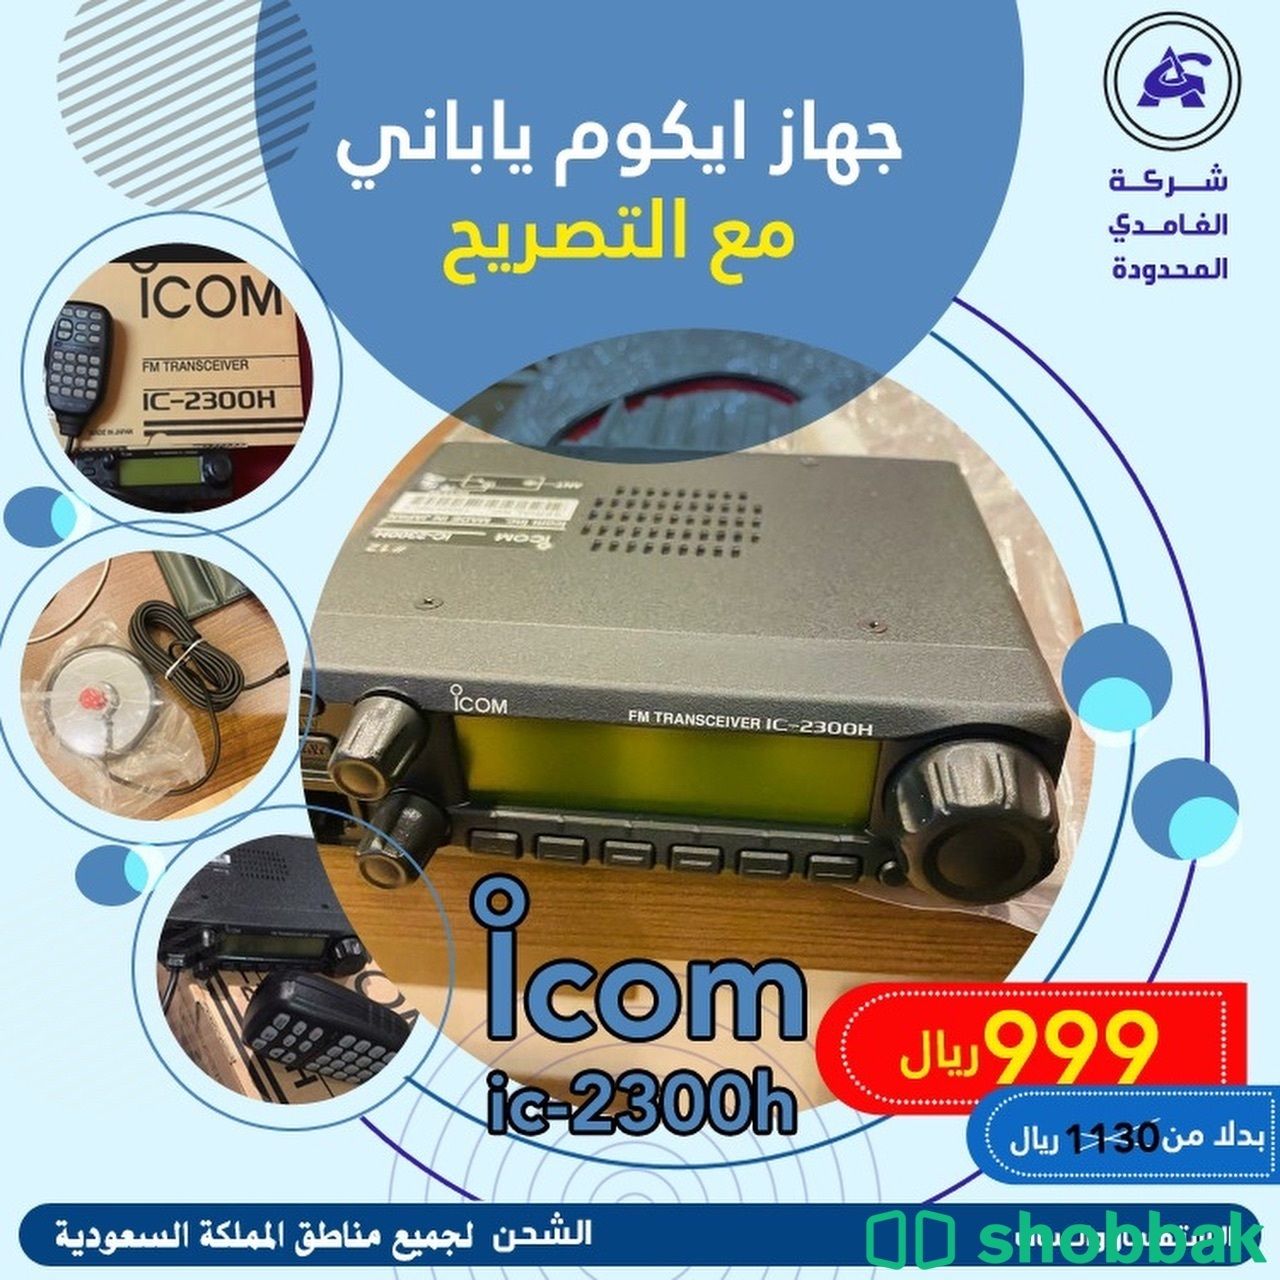 جهاز ايكوم  Shobbak Saudi Arabia